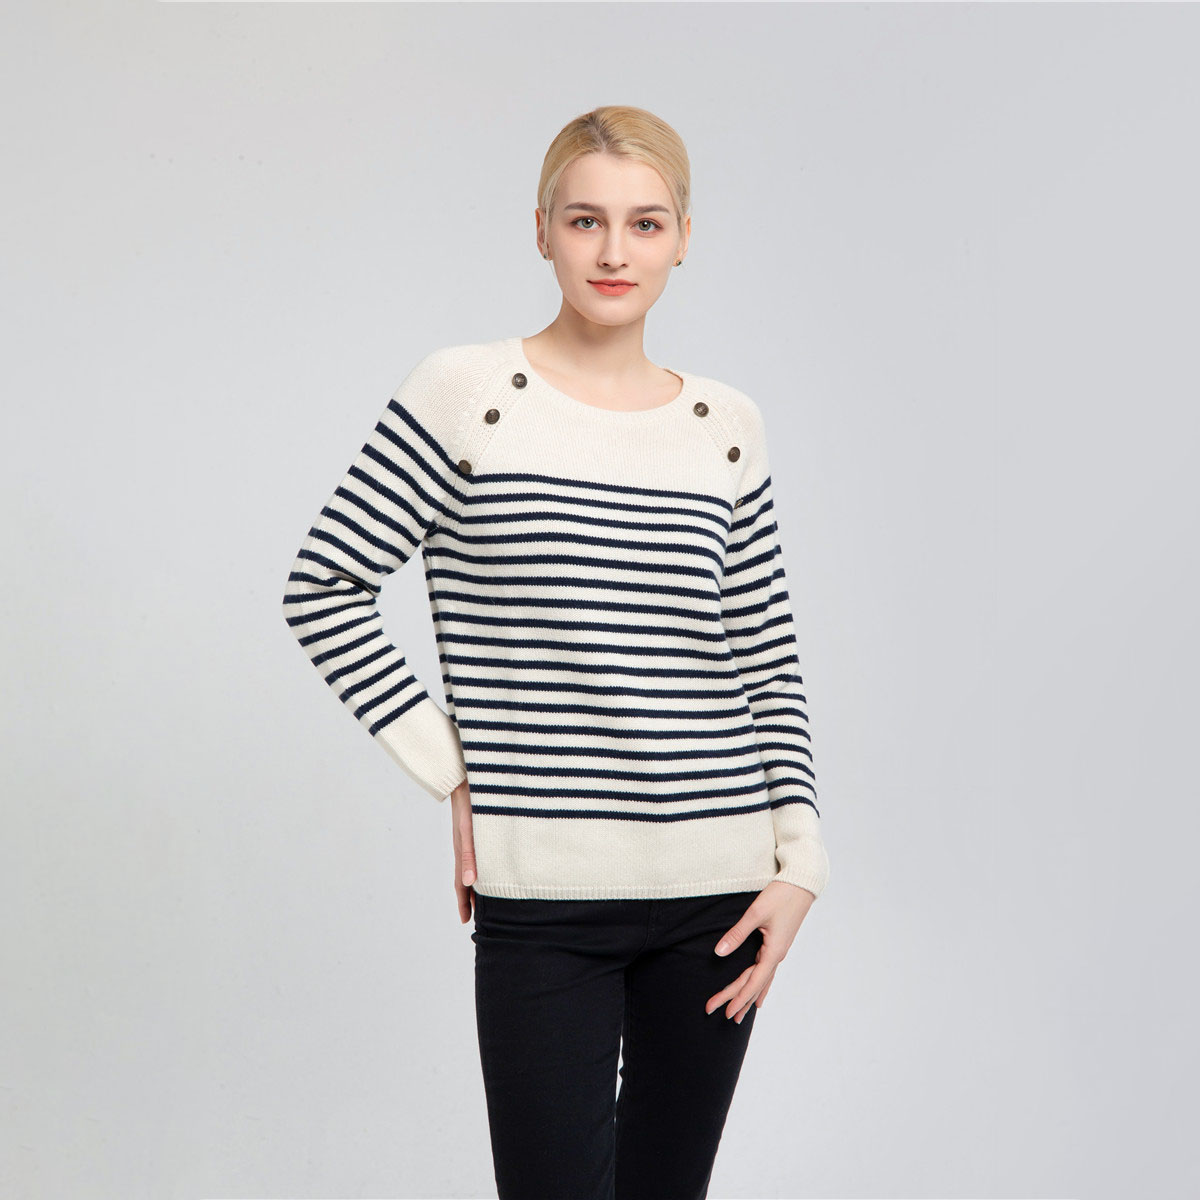 women's pure cashmere sweater fashion style